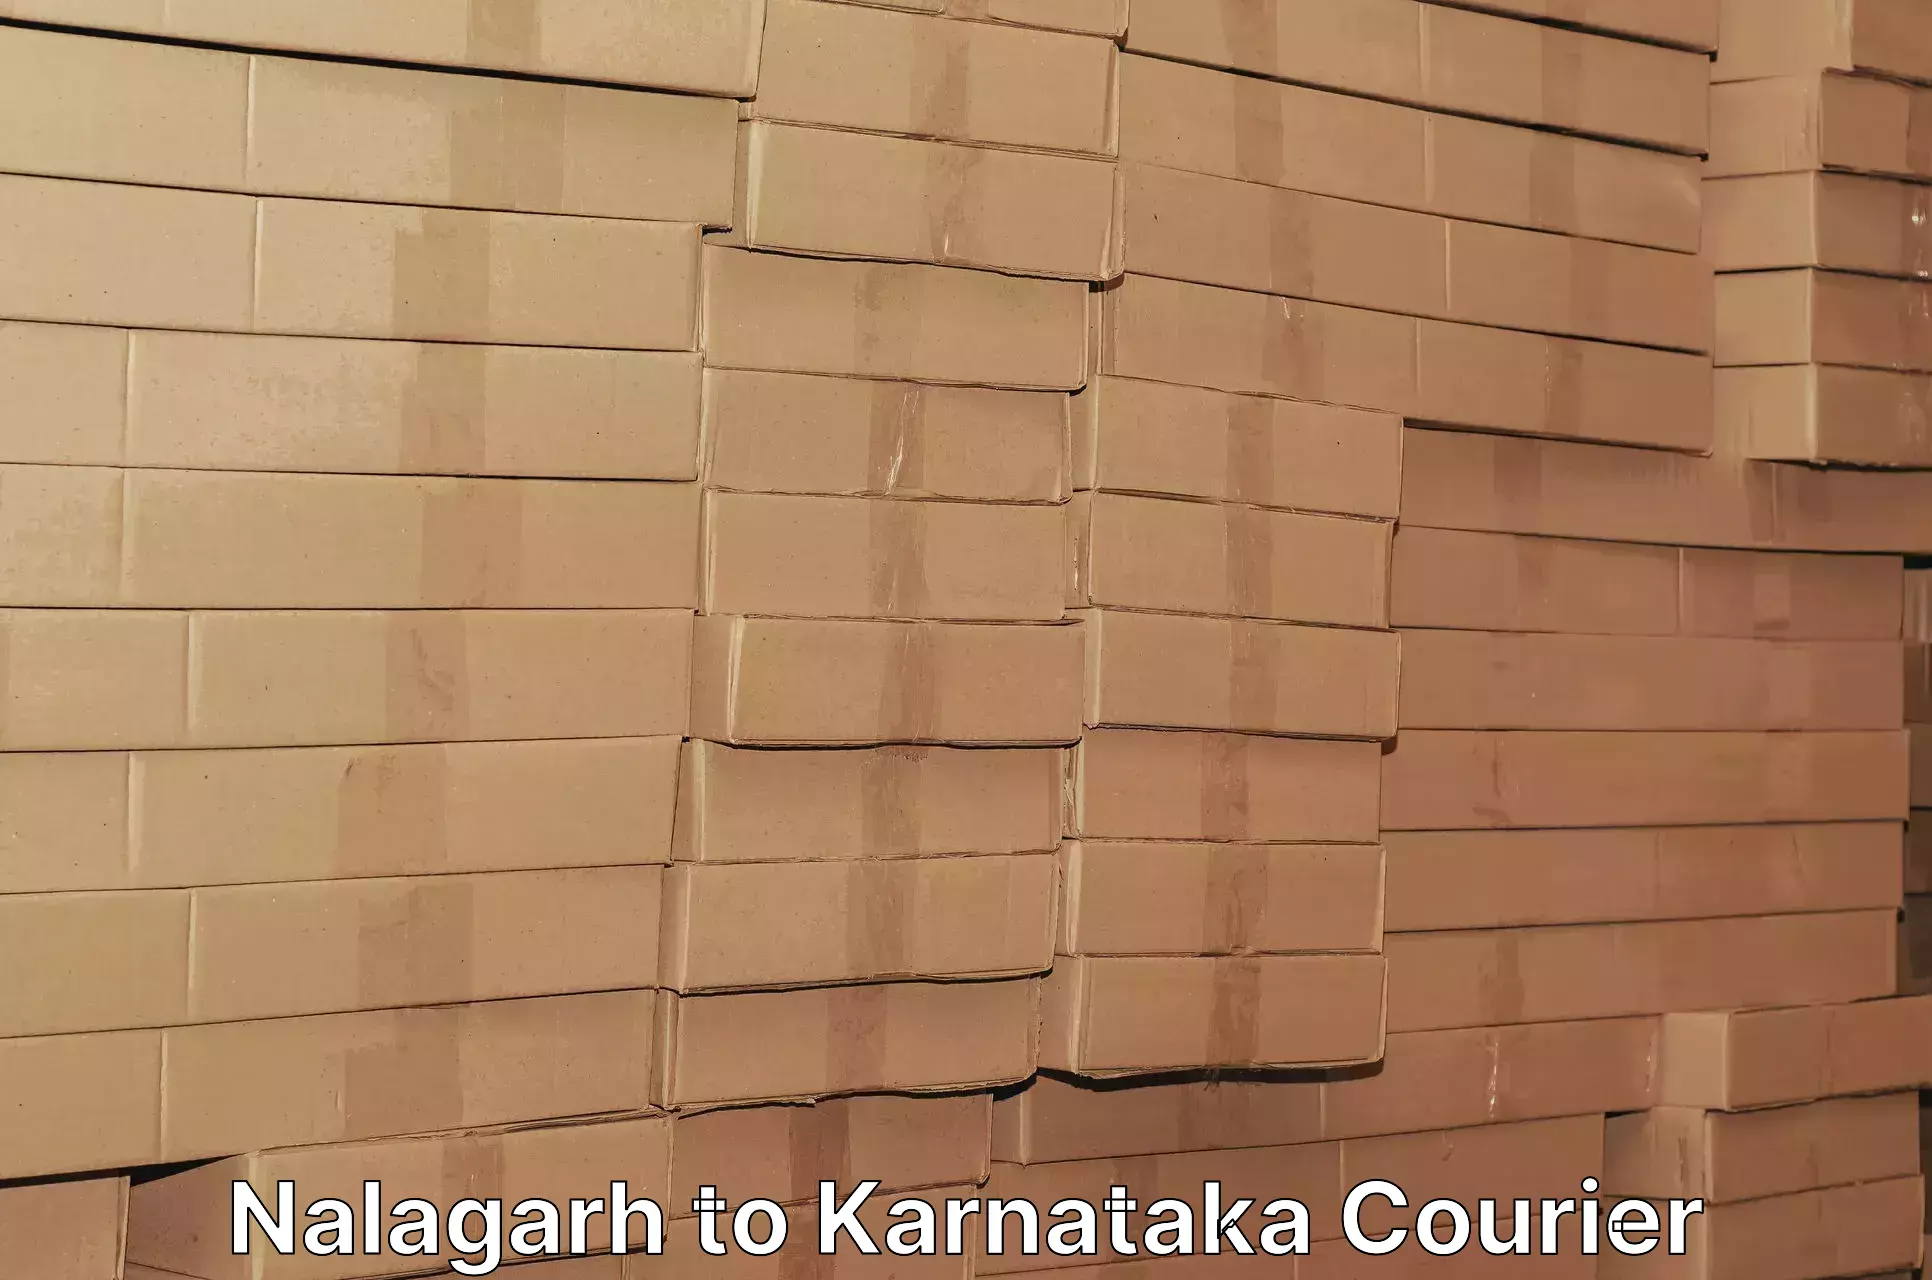 User-friendly delivery service Nalagarh to Karnataka